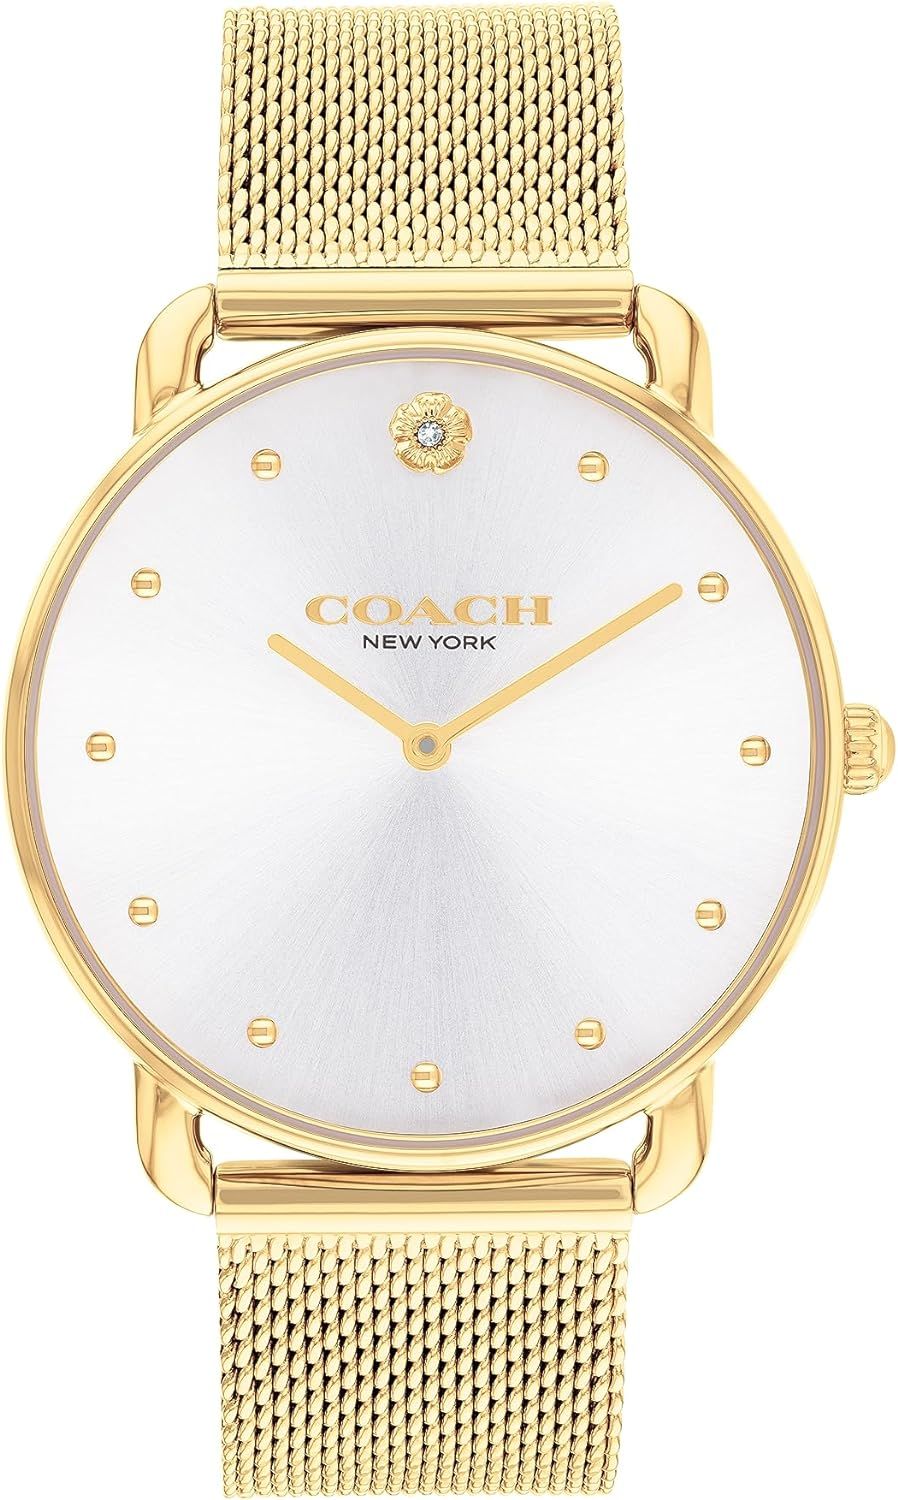 COACH Elliot Women's Quartz Watch, Water-Resistant, True Classic Design for Any Event | Amazon (US)